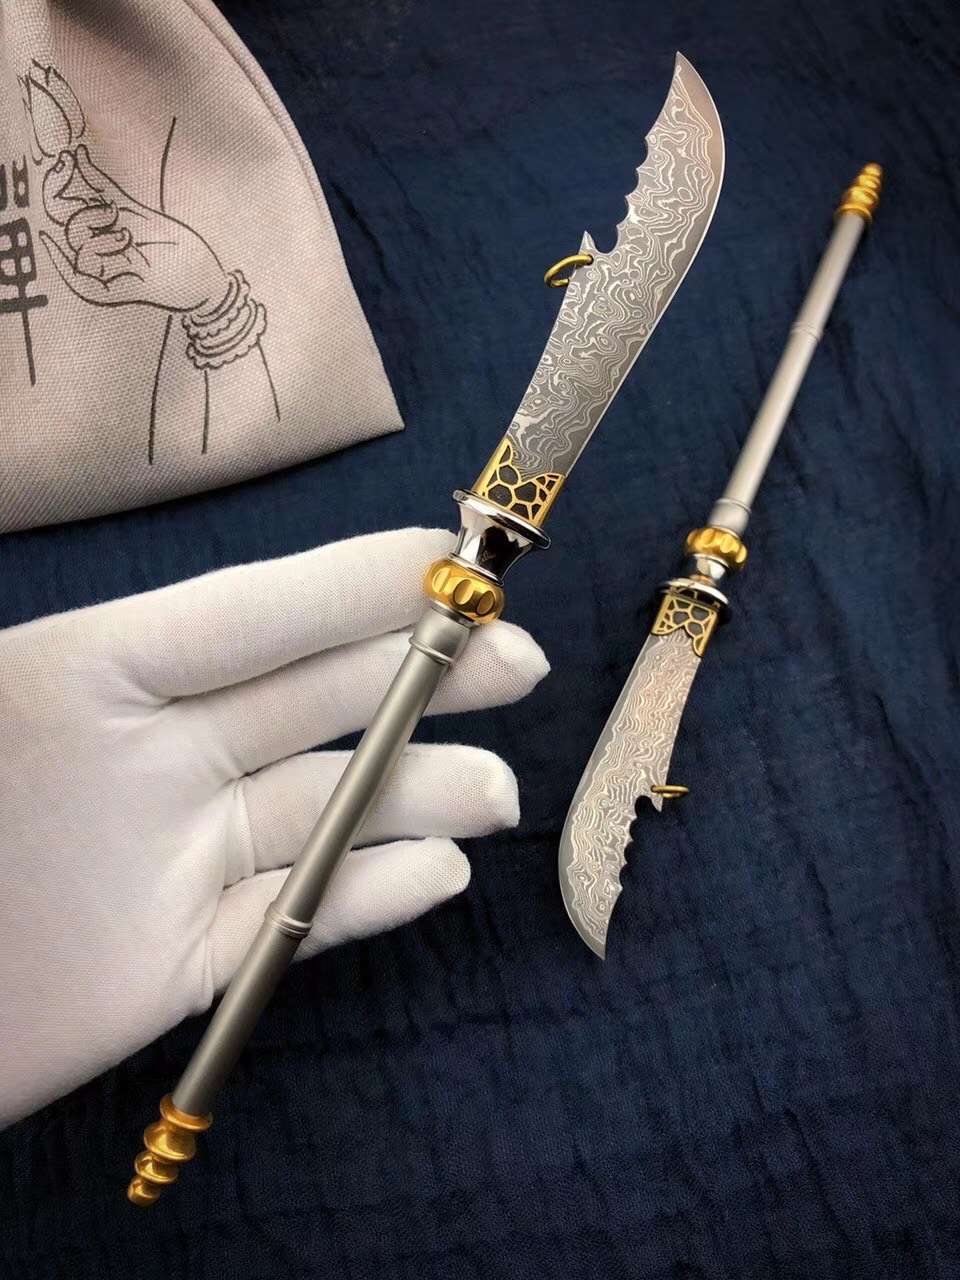 The Crescent Blade Damascus Steel Pocket Knife Assemble Version